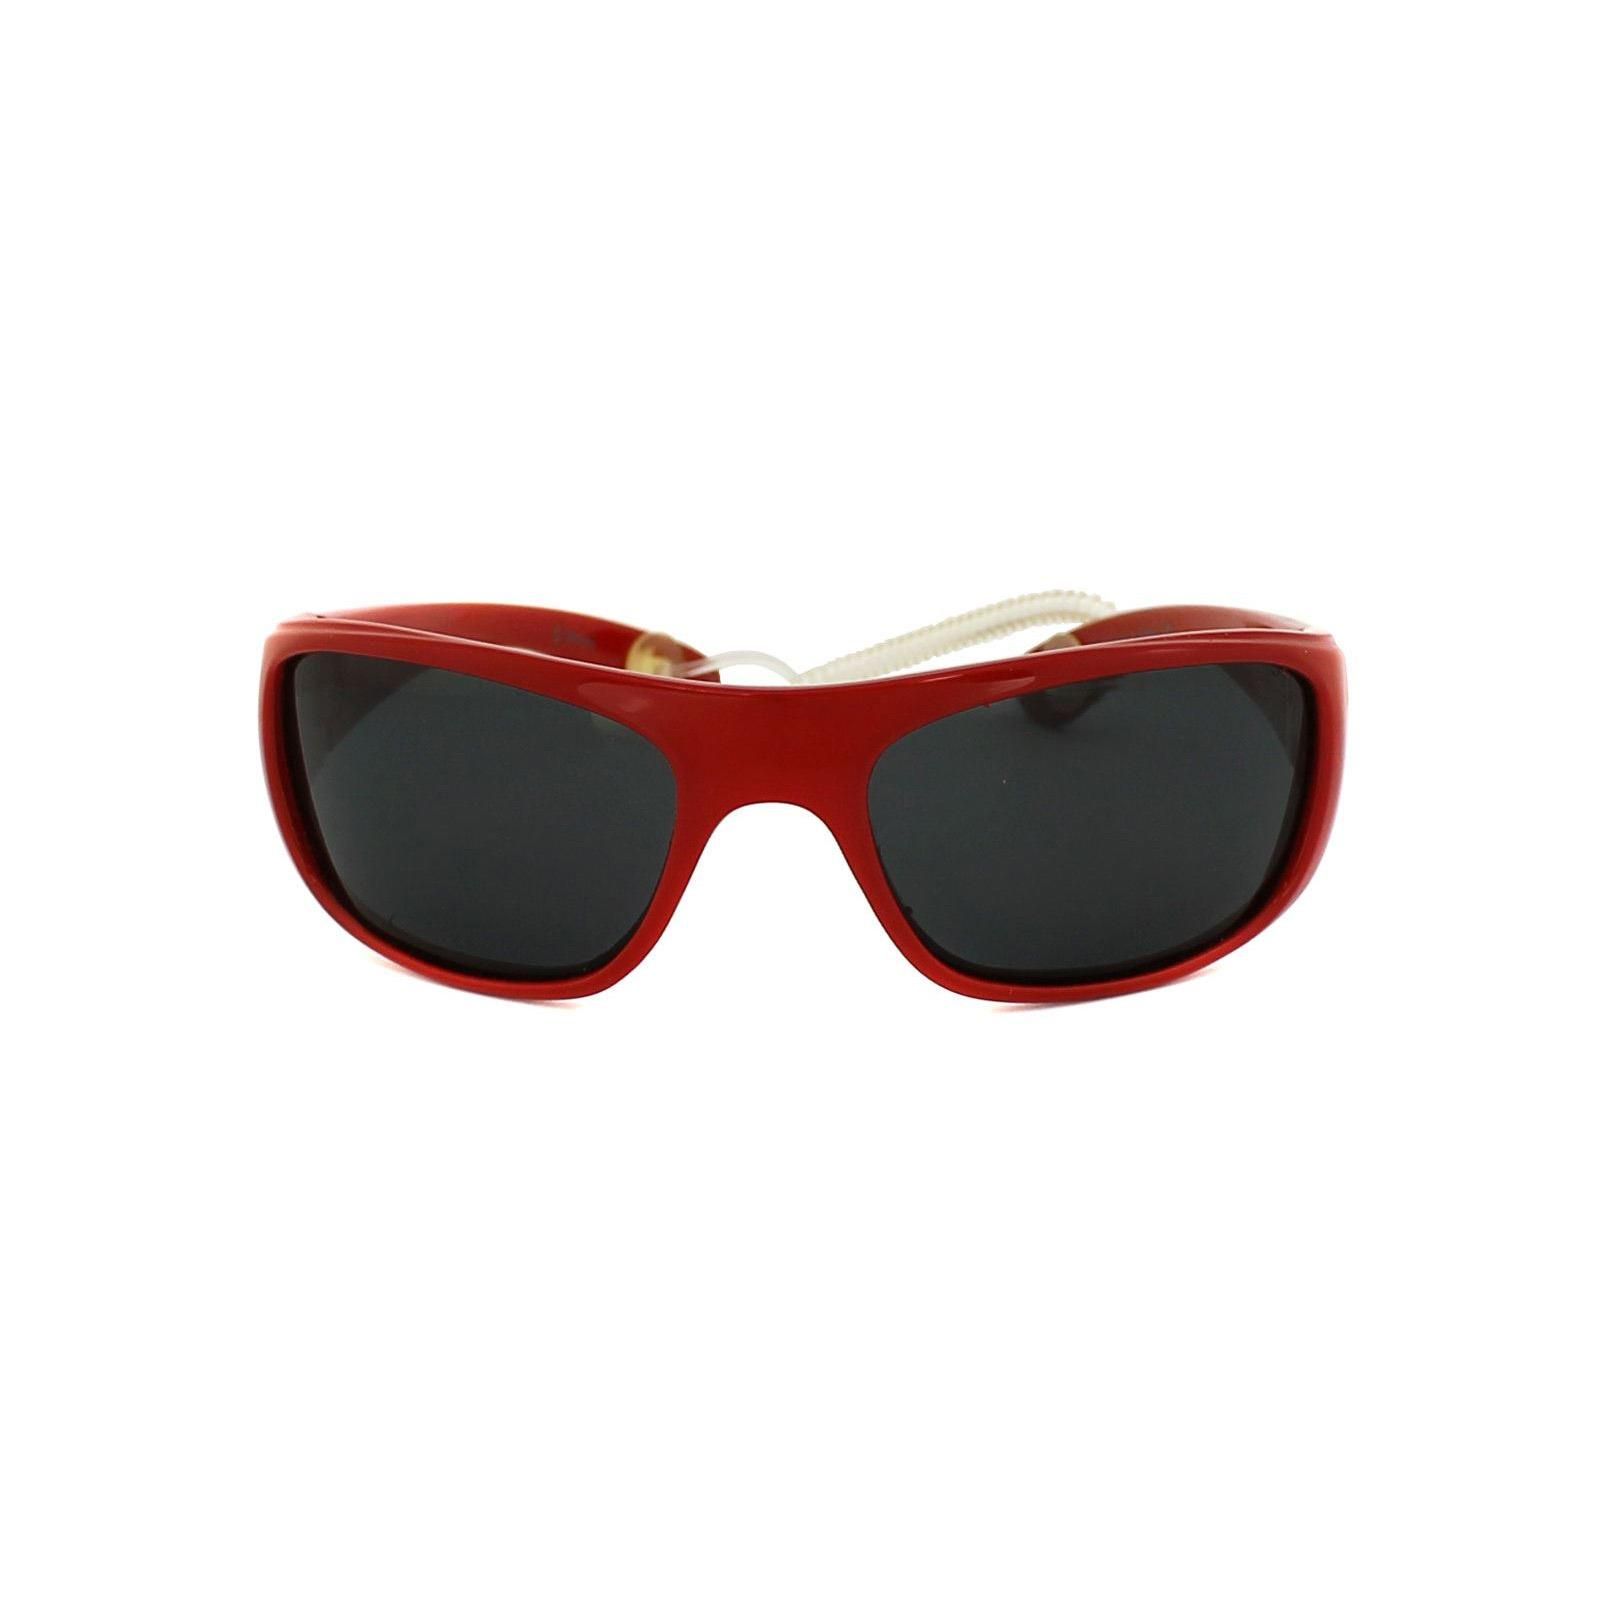 Disney Sunglasses Mickey Mouse D0103 B Red Black Polarized